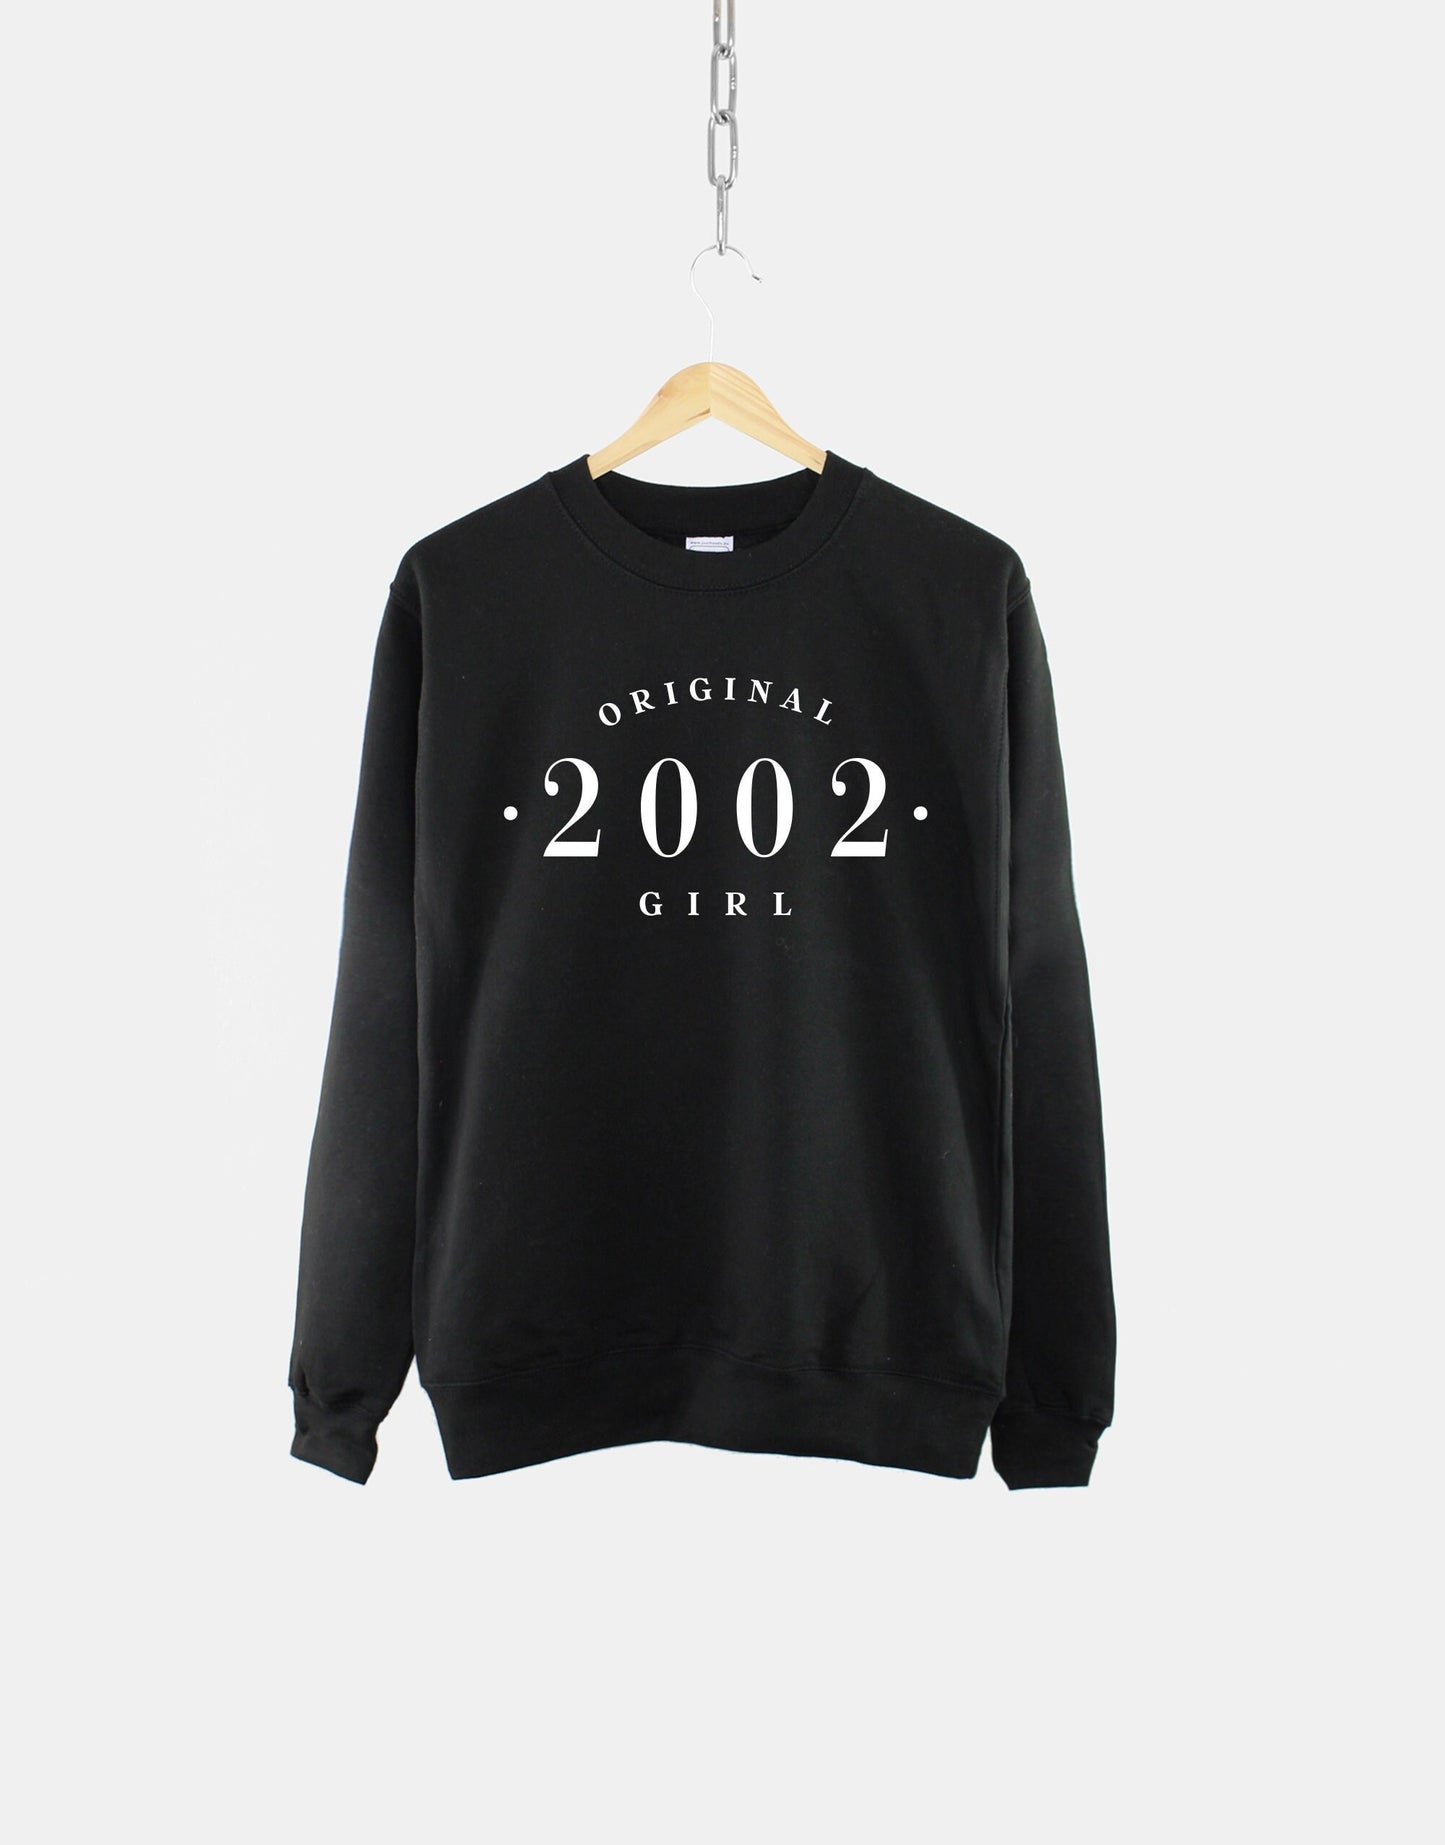 Original 2002 Girl Sweatshirt - Womens Vintage 21st Birthday Shirt - Ladies Birth Year Numbers Jumper